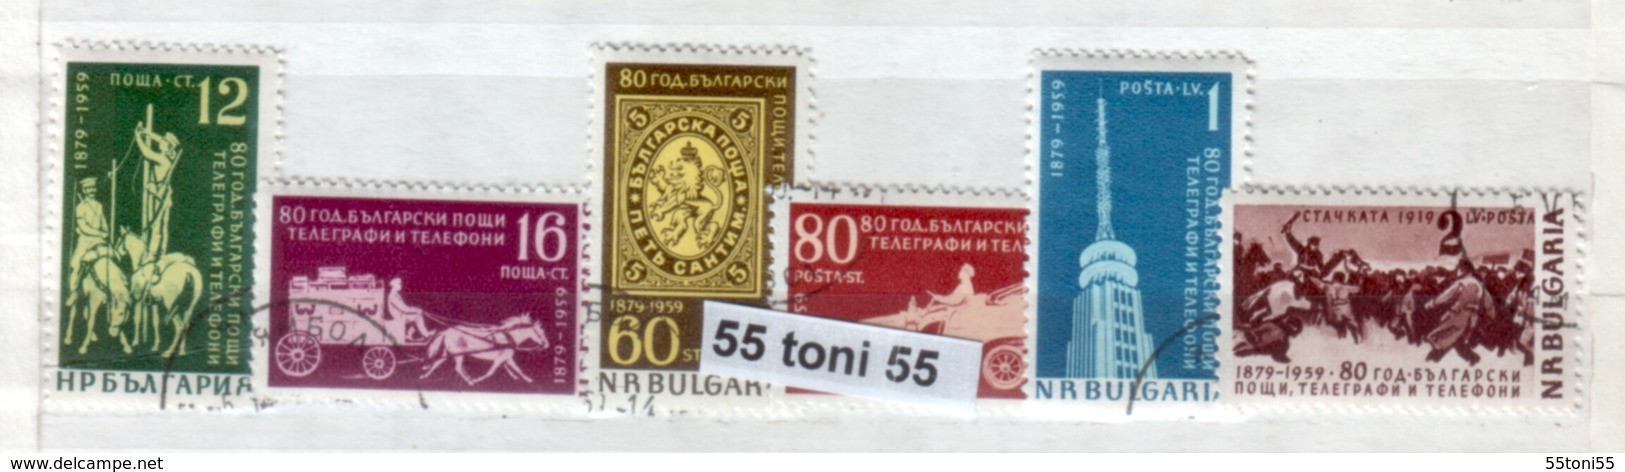 1959 80 Anniversaire De La Poste ( Chevaux - Cavalli) 6v. - Oblitere/used (O)Bulgarien / Bulgaria - Usados